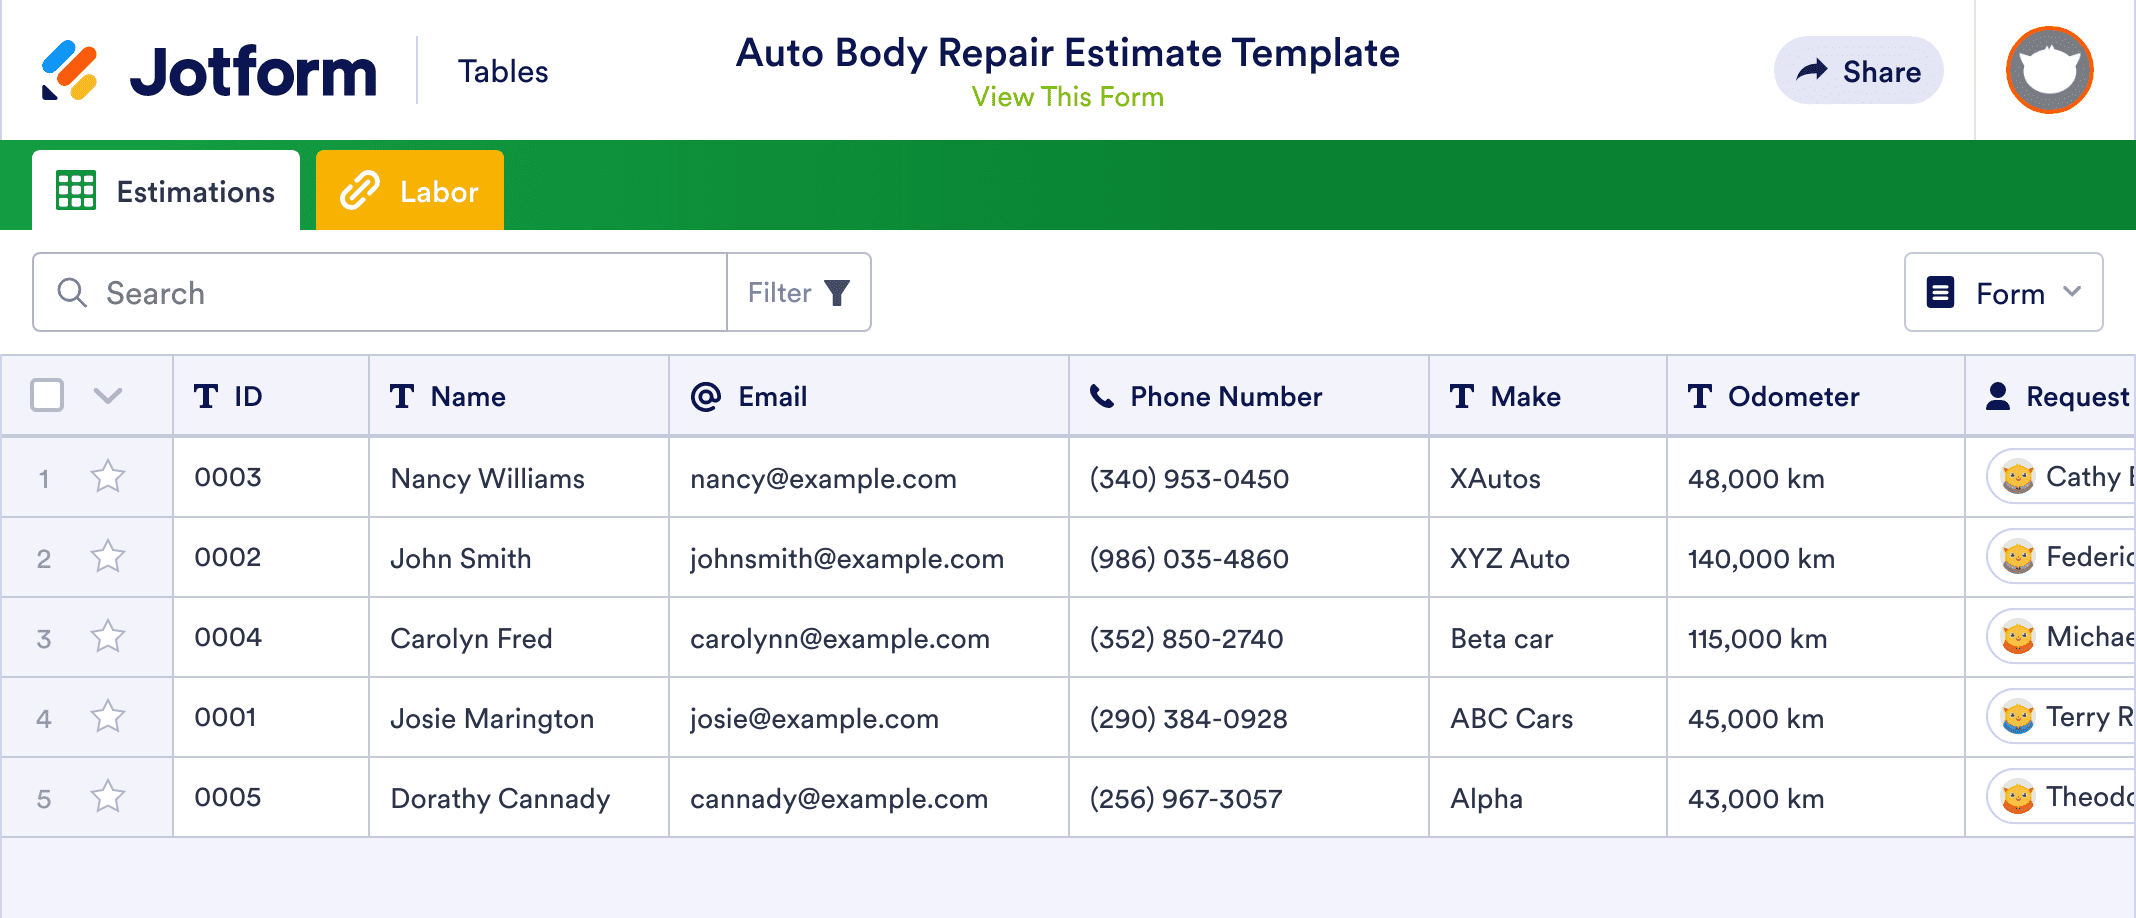 Auto Body Repair Estimate Template